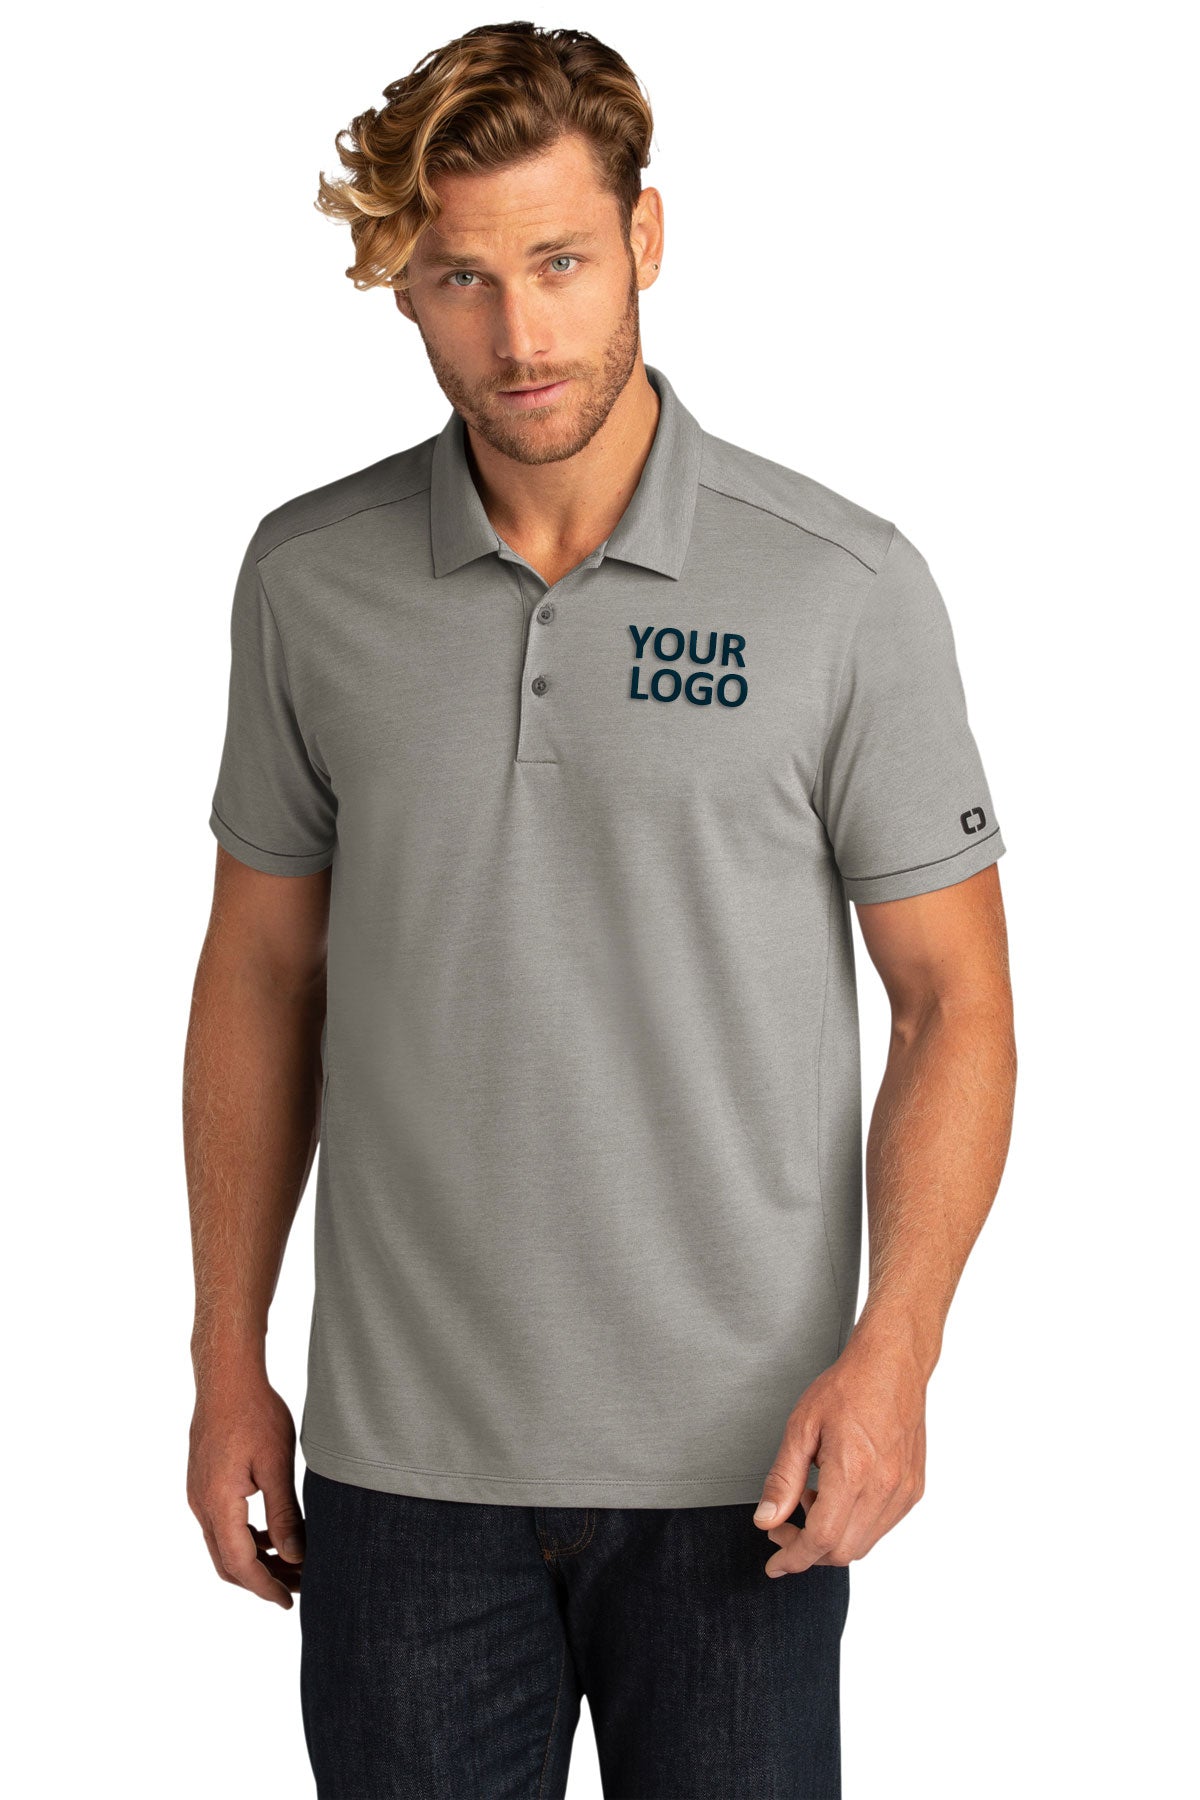 custom logo polo shirts embroidered OGIO Tarmac Grey Heather OG146